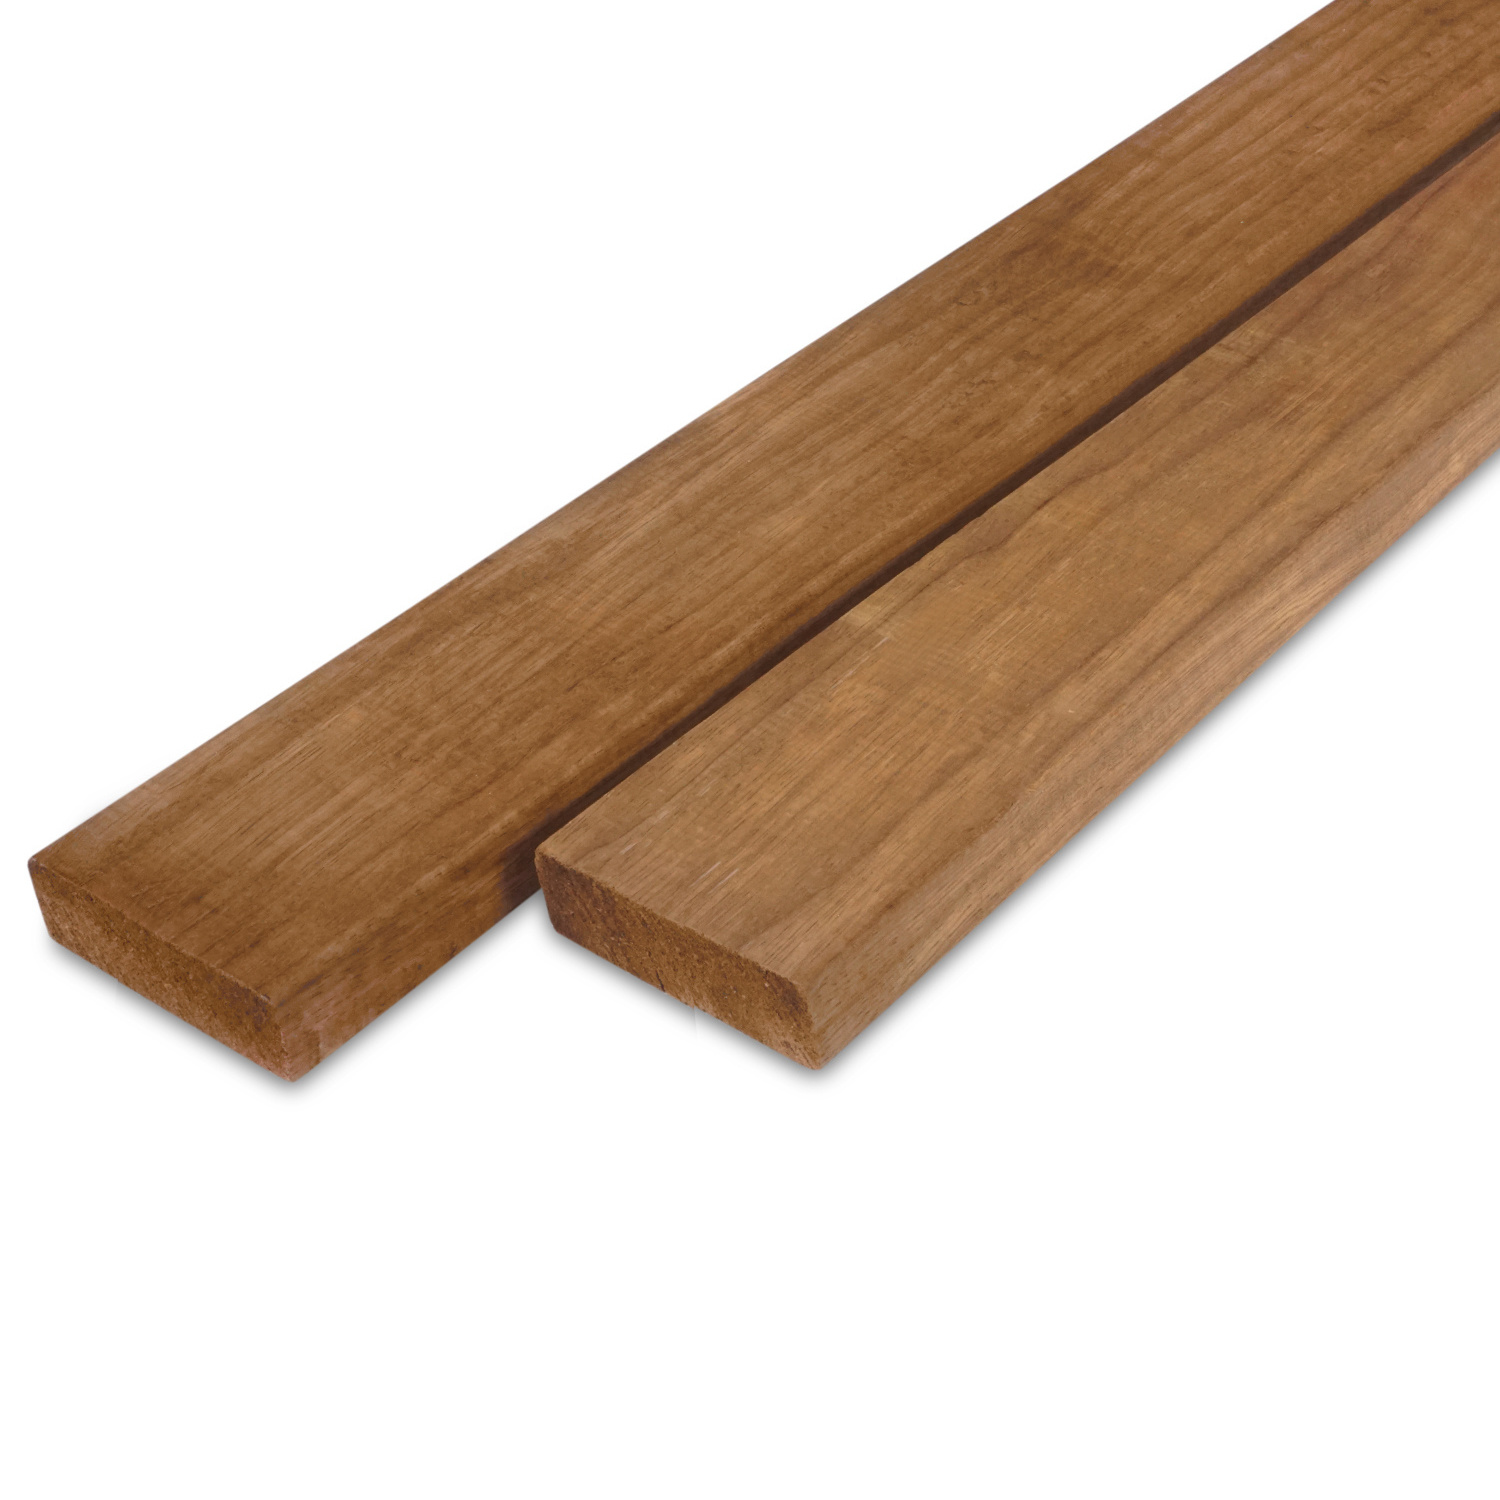  Thermowood Fraké rhombus deel - profiel - plank 21x90 mm - geschaafd - kunstmatig gedroogd (kd 8-12%) - thermisch gemodificeerd Fraké hout (thermohout)